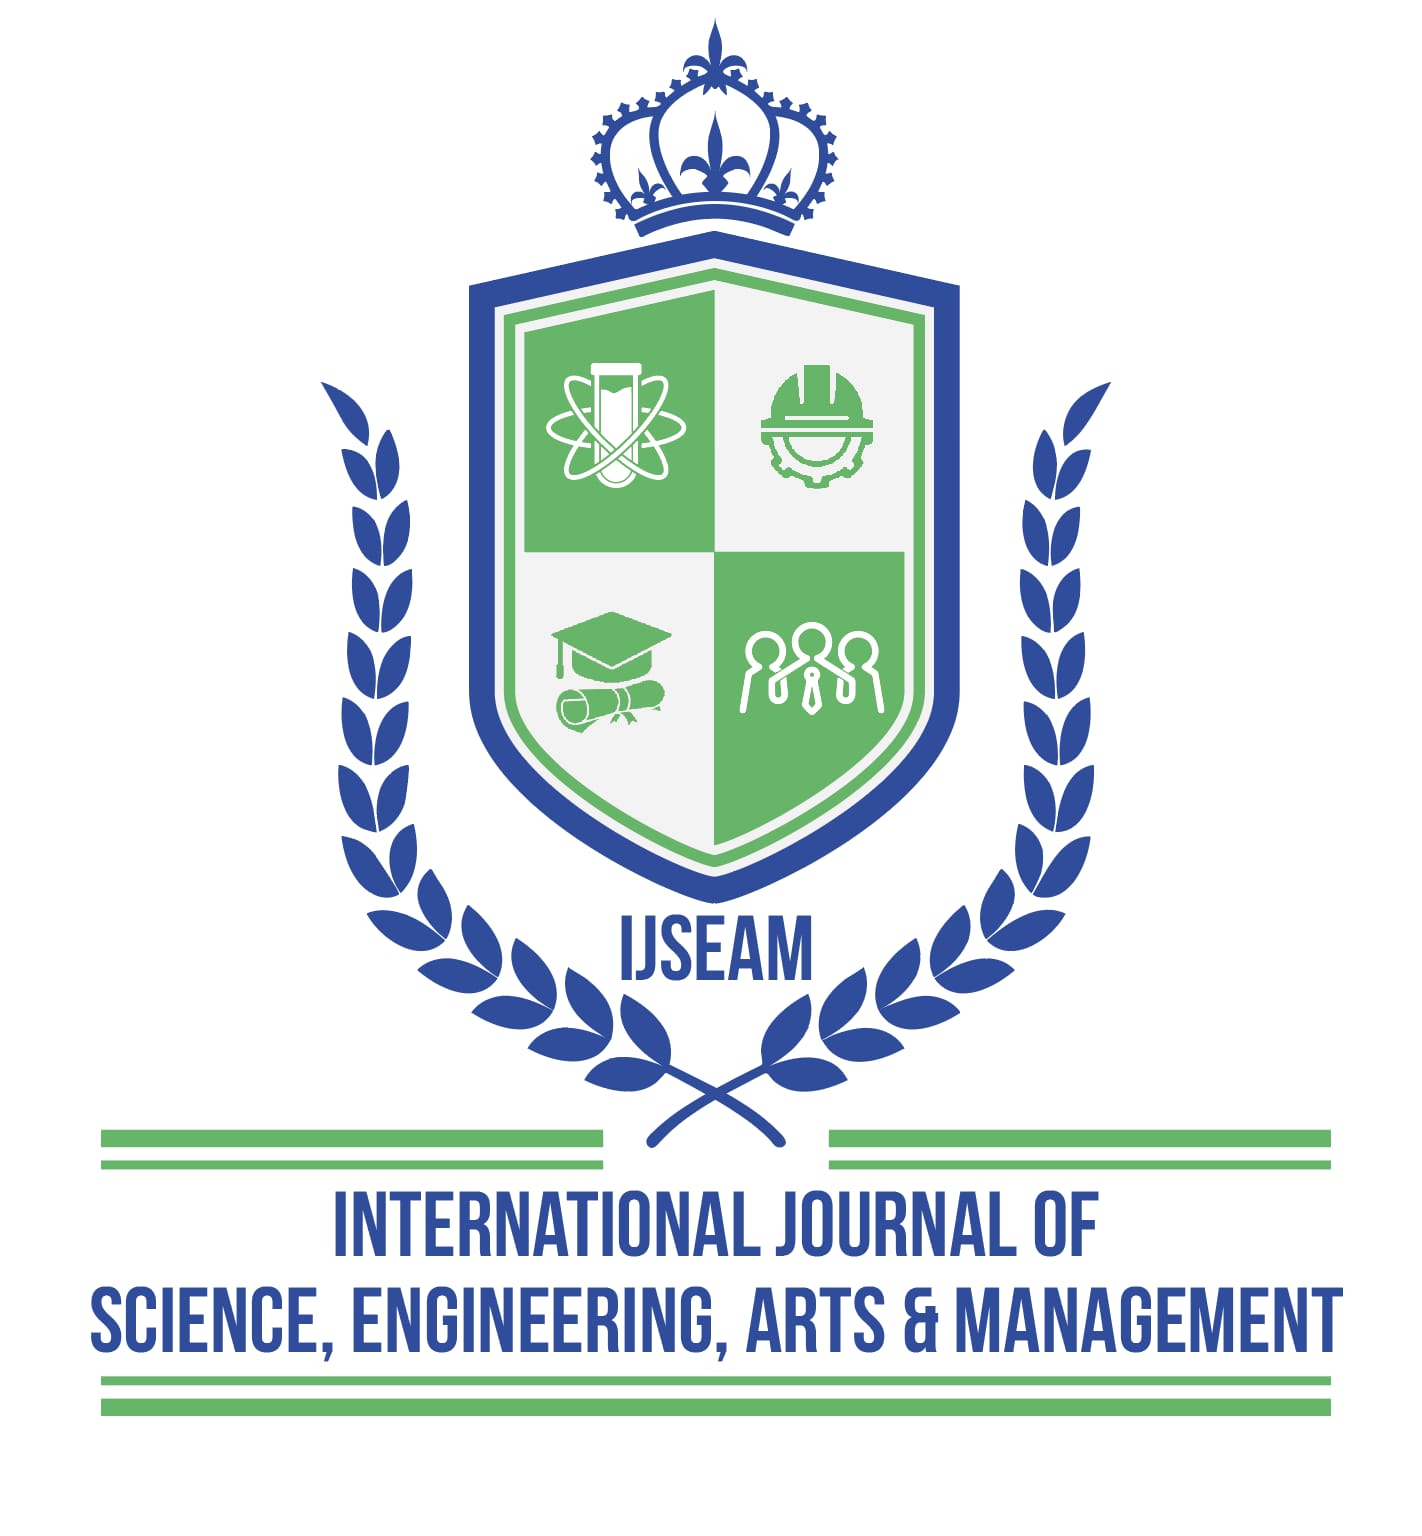  INTERNATIONAL JOURNAL OF SCIENCE, ENGINEERING,ARTS & MANAGEMENT.